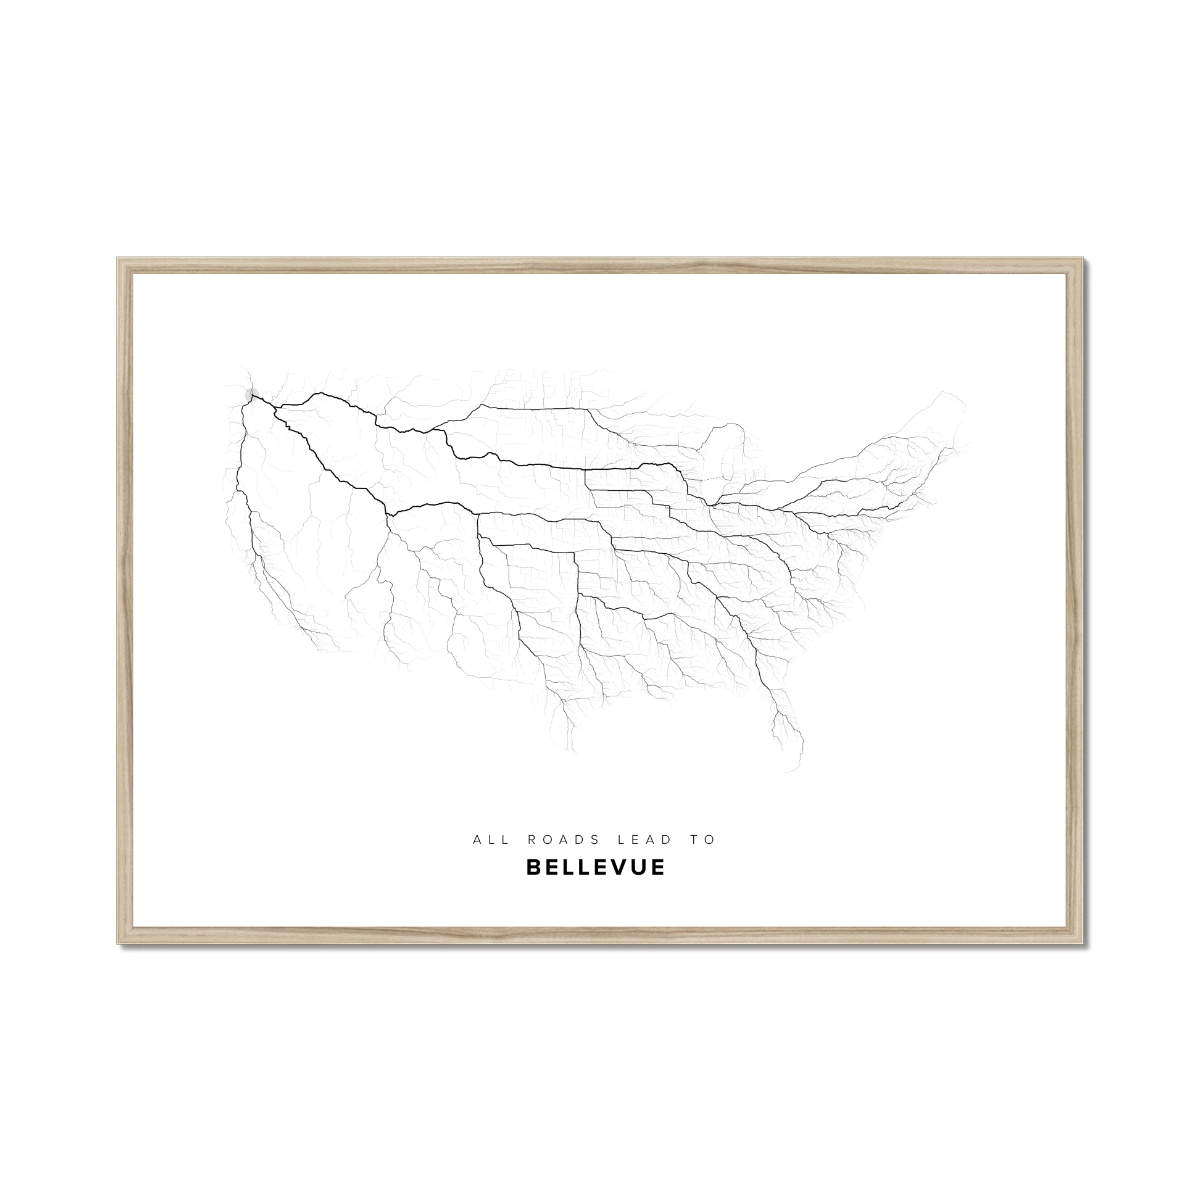 All roads lead to Bellevue (United States of America) Fine Art Map Print